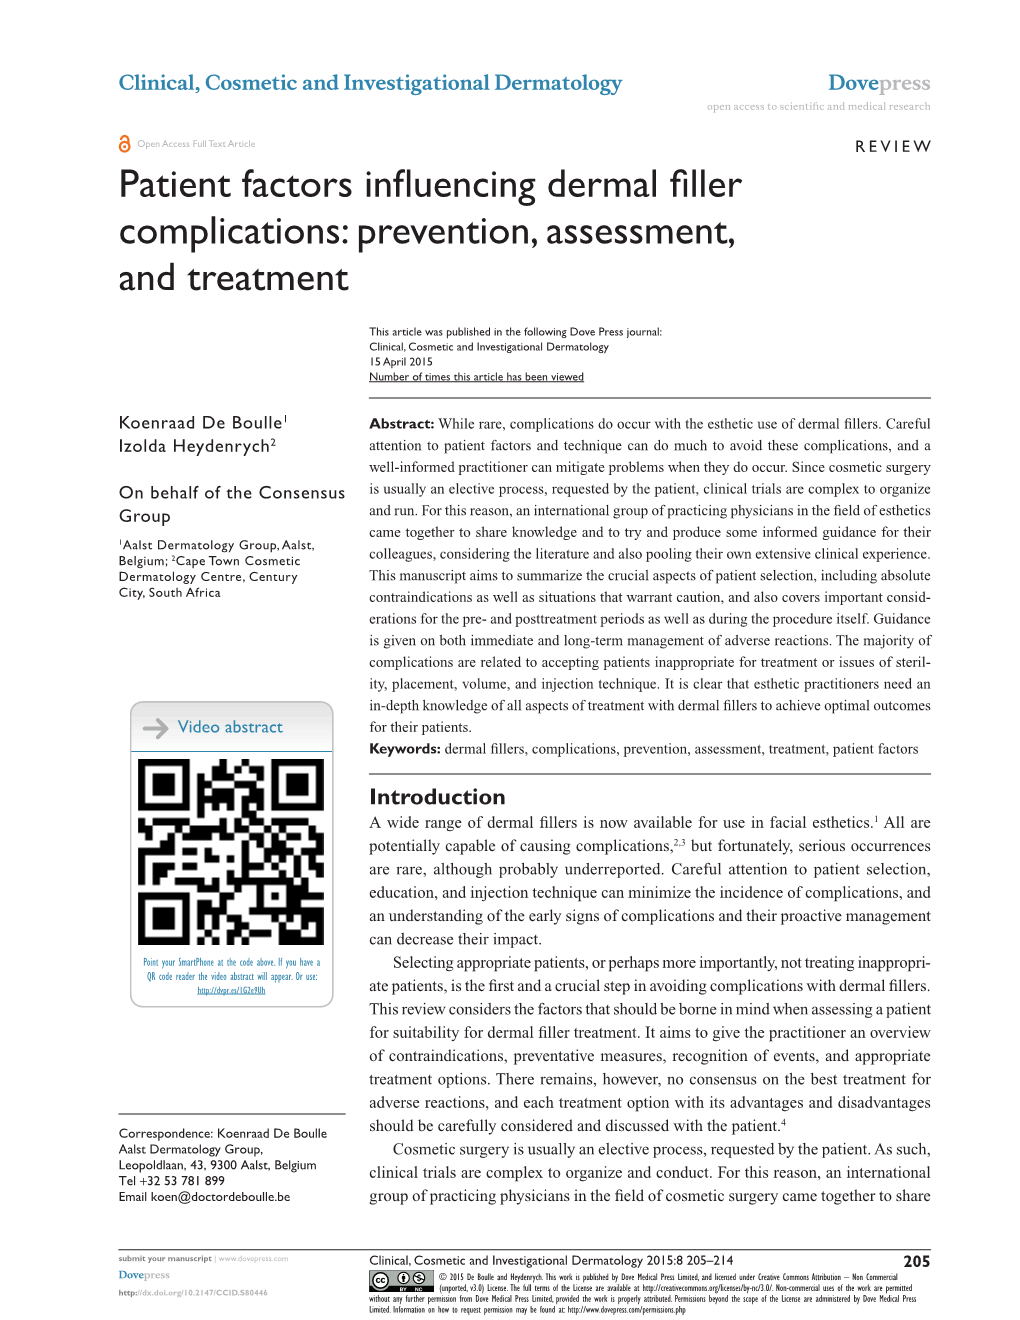 Patient Factors Influencing Dermal Filler Complications: Prevention, Assessment, and Treatment